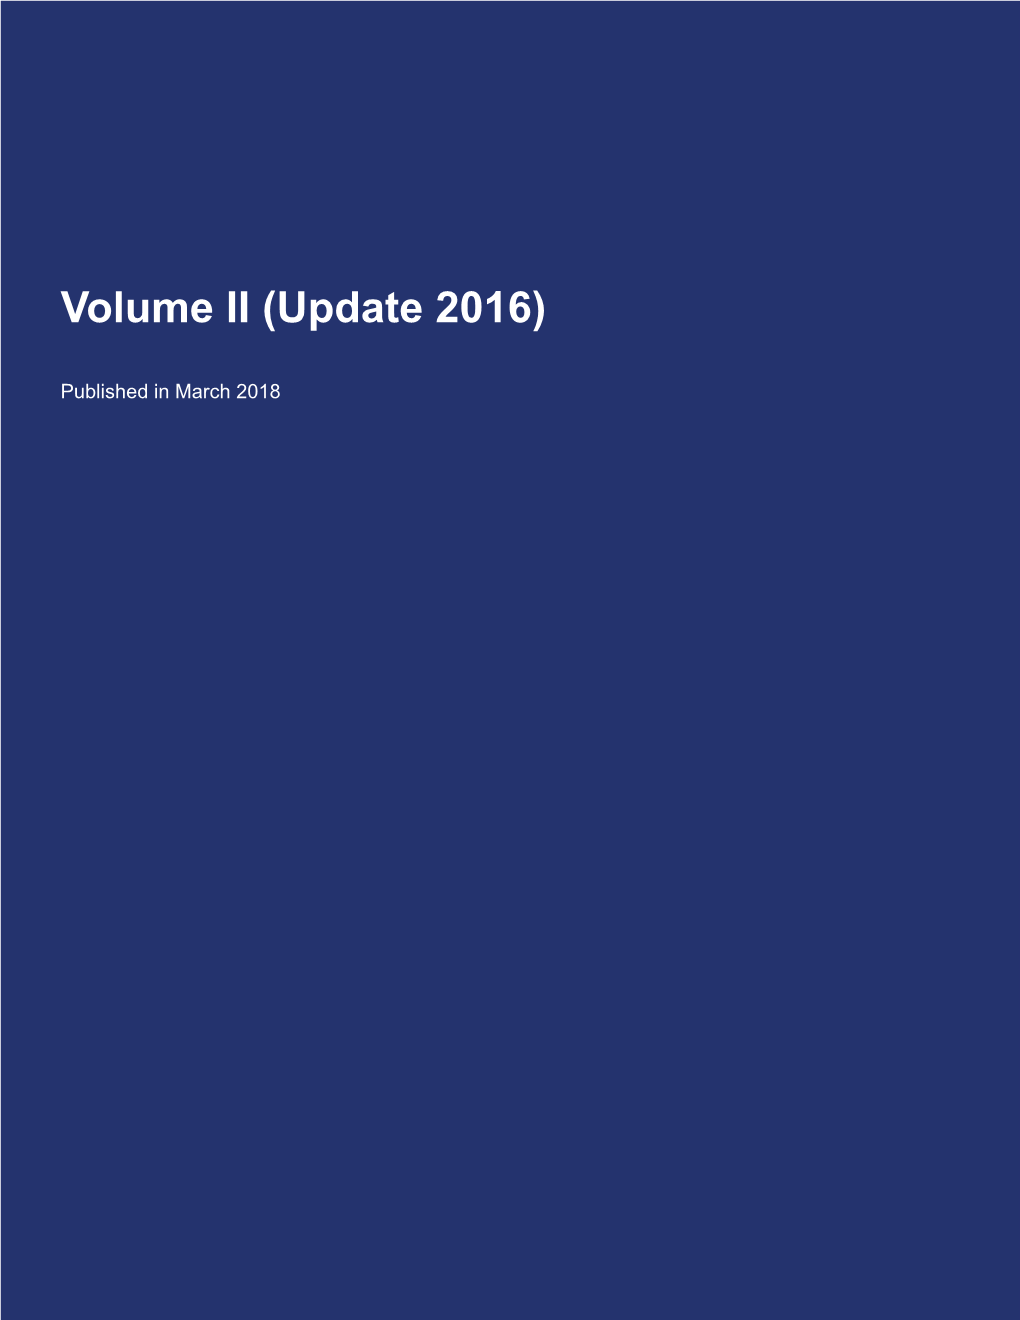 Technical Report Volume II (2016)